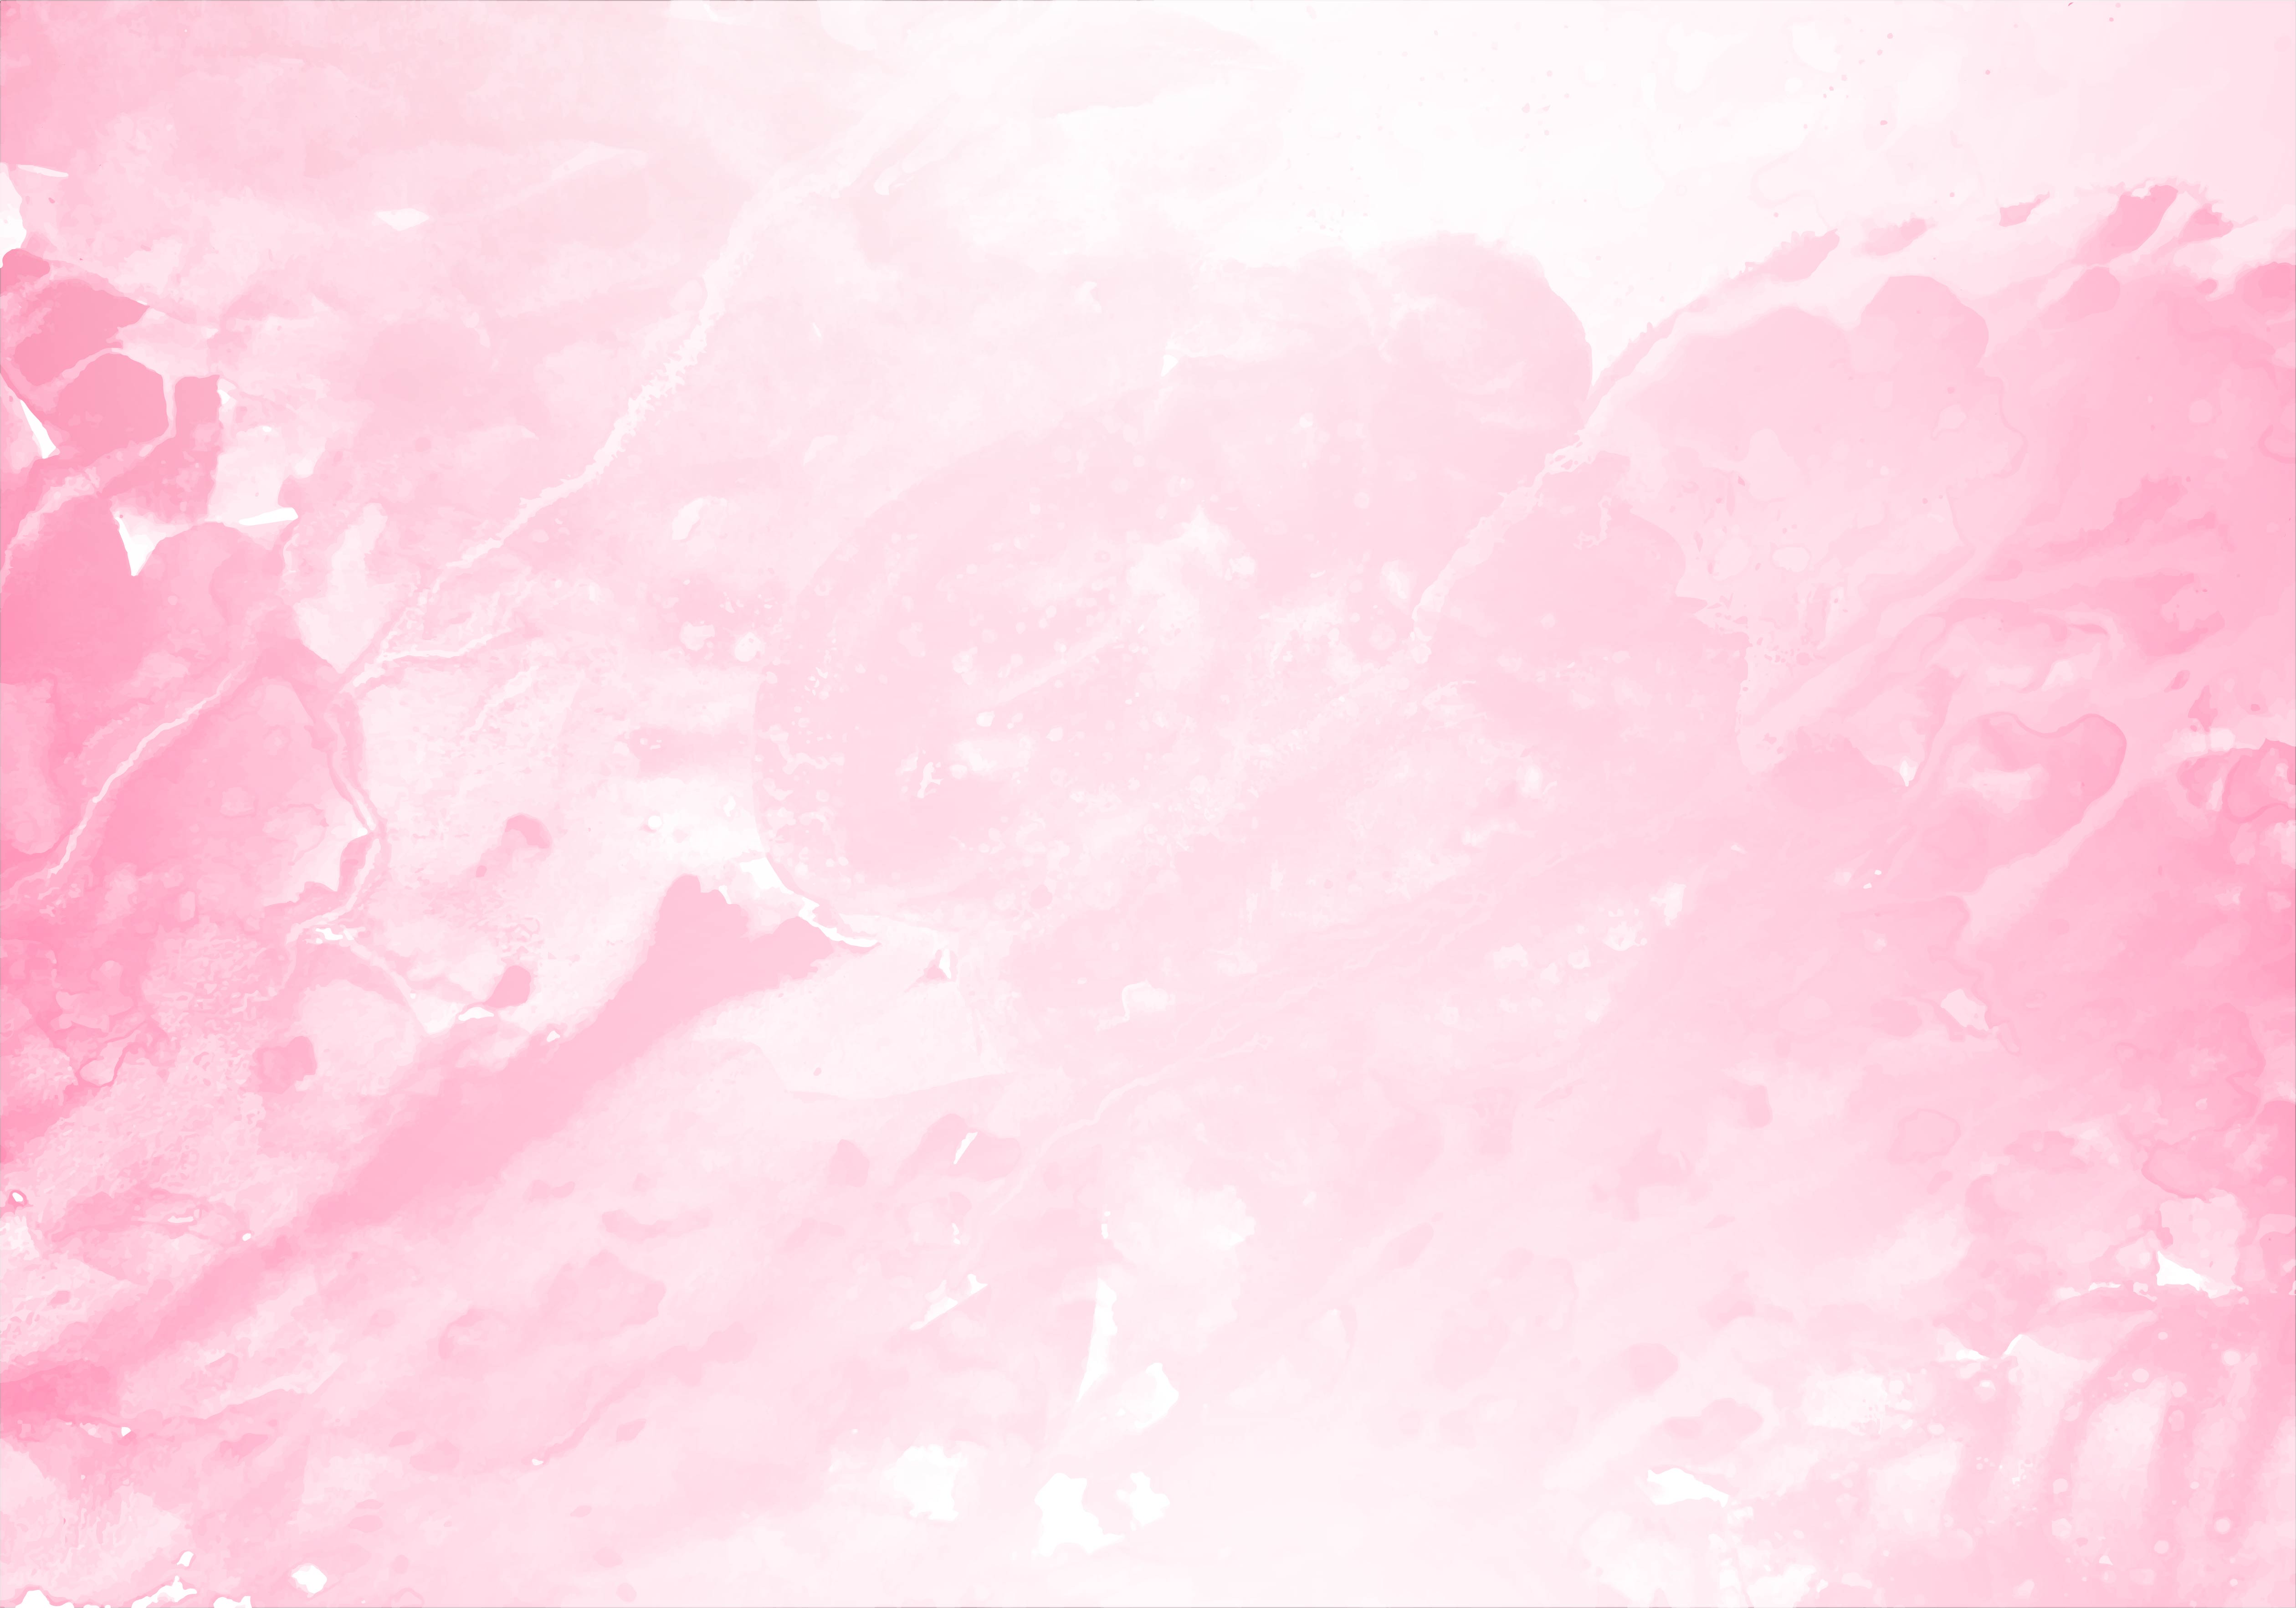 Pink Watercolor Splash Background